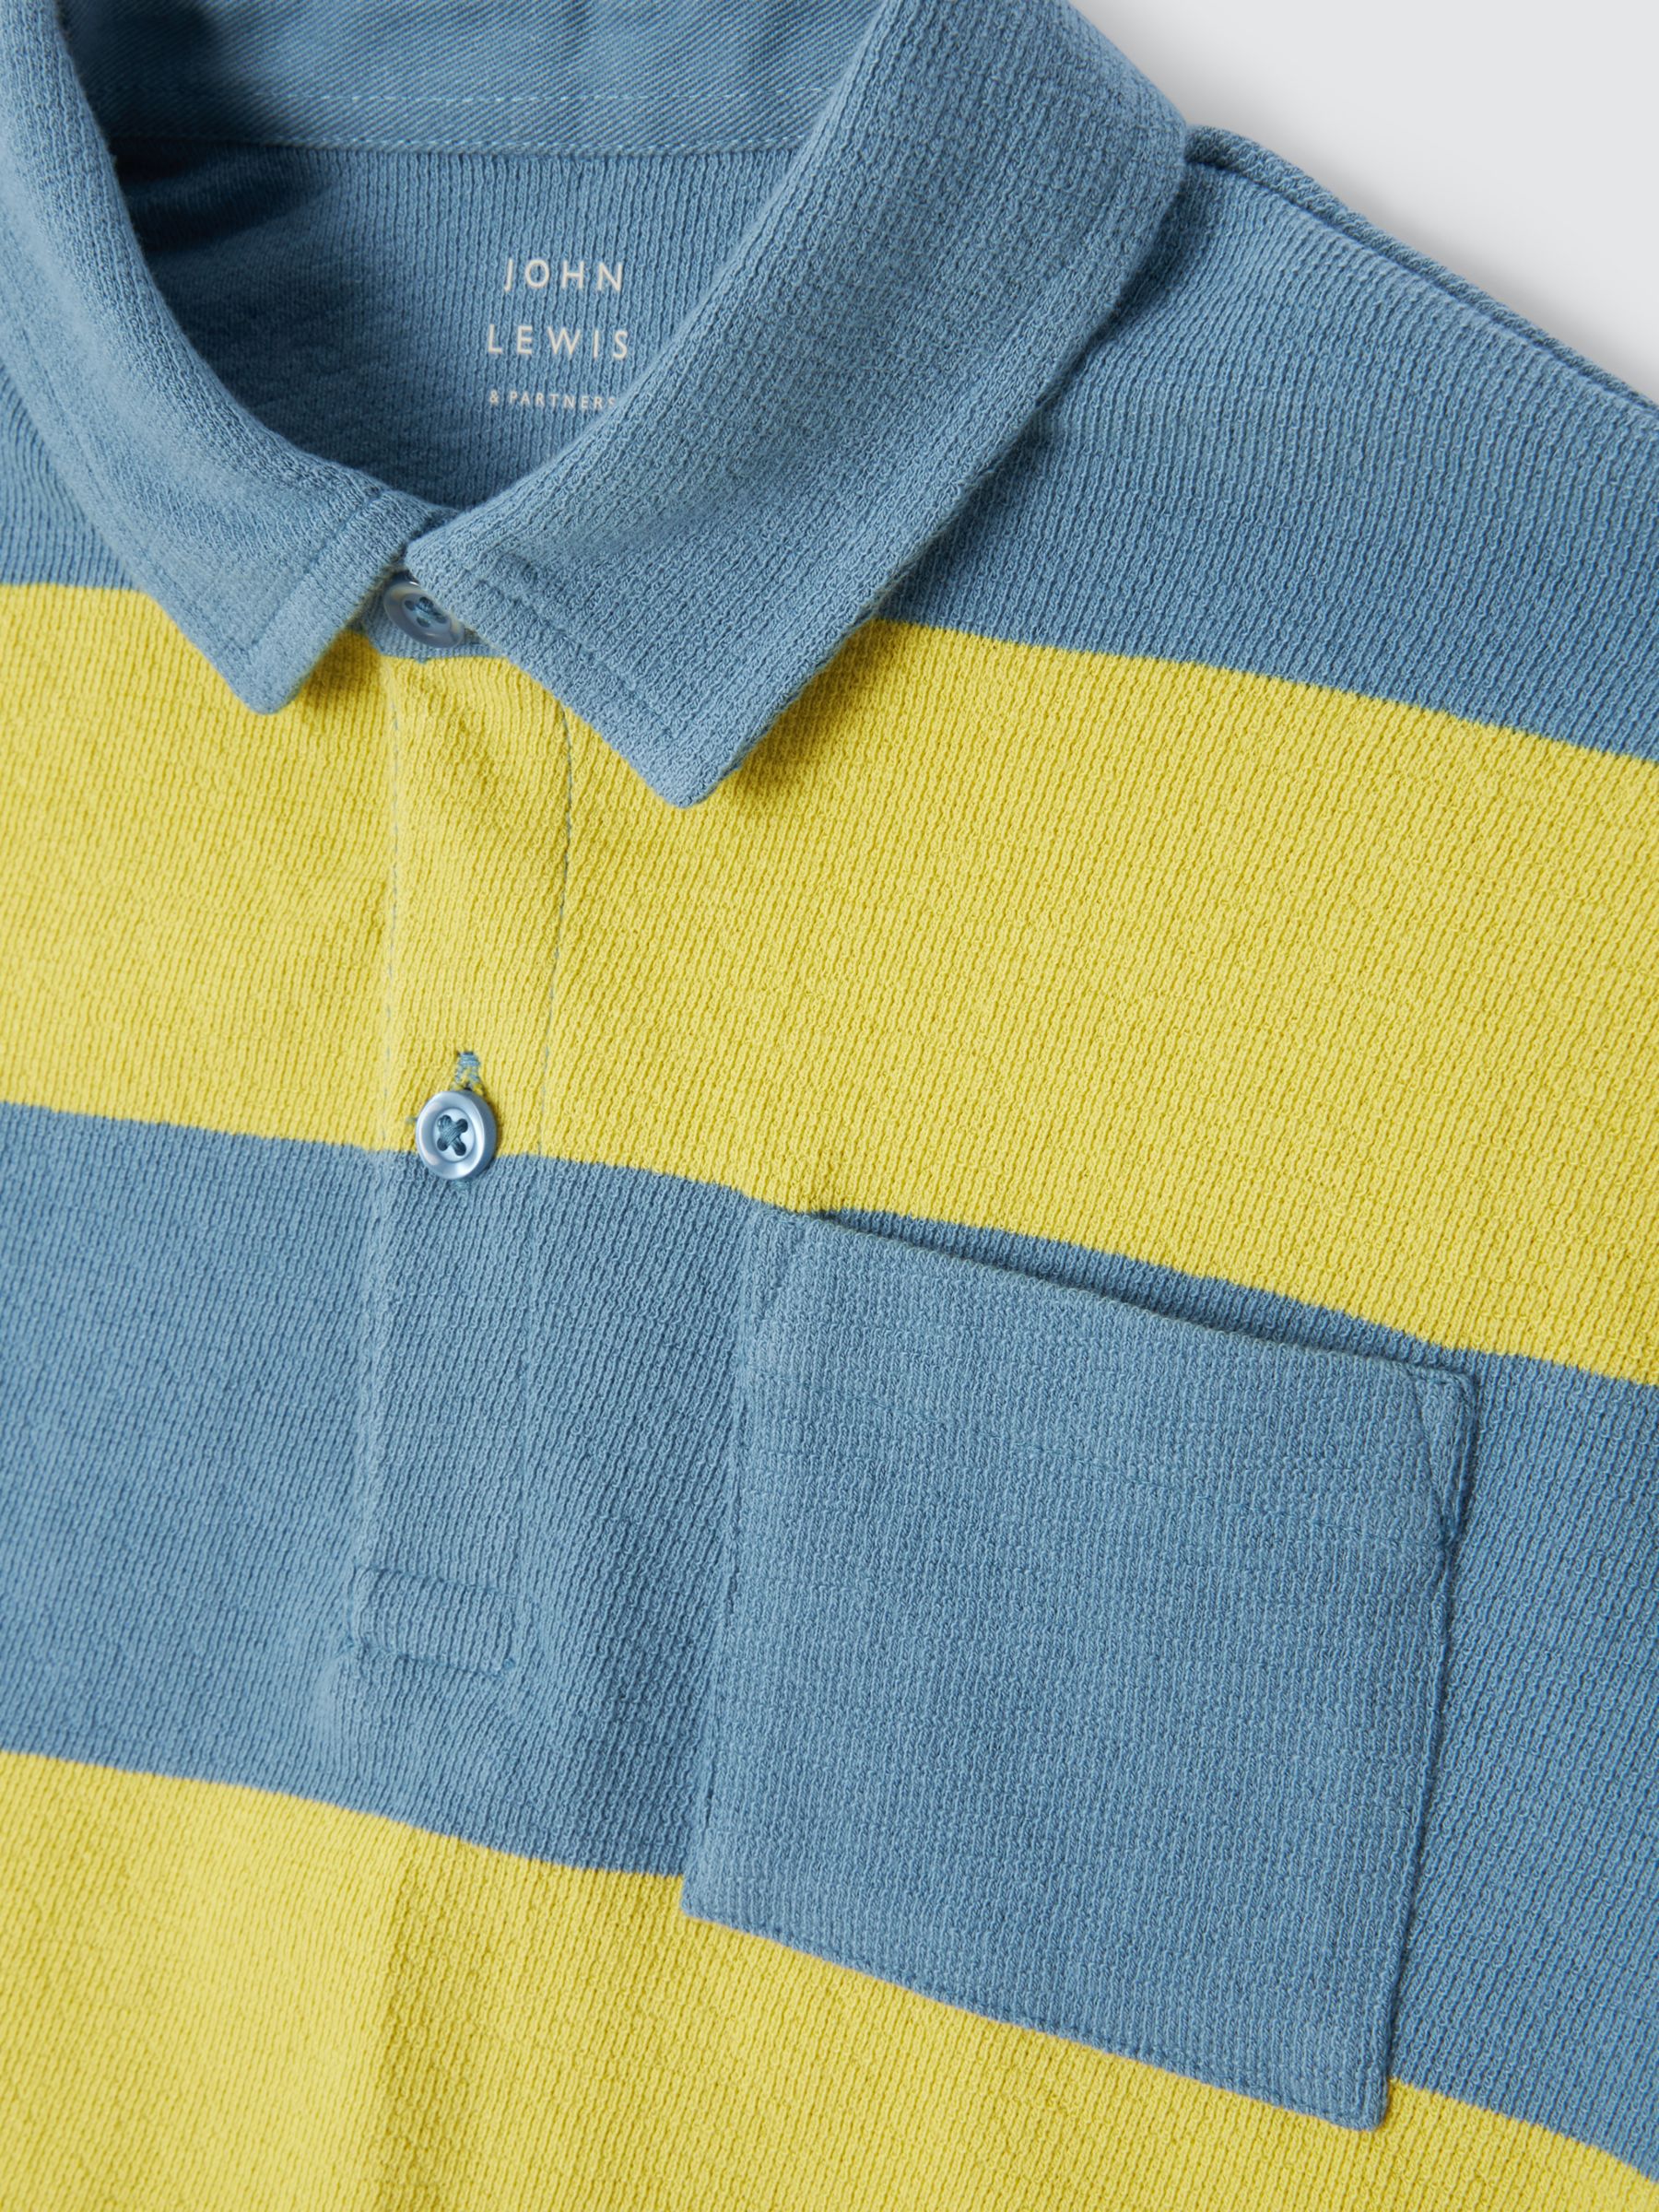 John Lewis Kids' Stripe Short Sleeve Polo Shirt, Yellow/Blue, 7 years